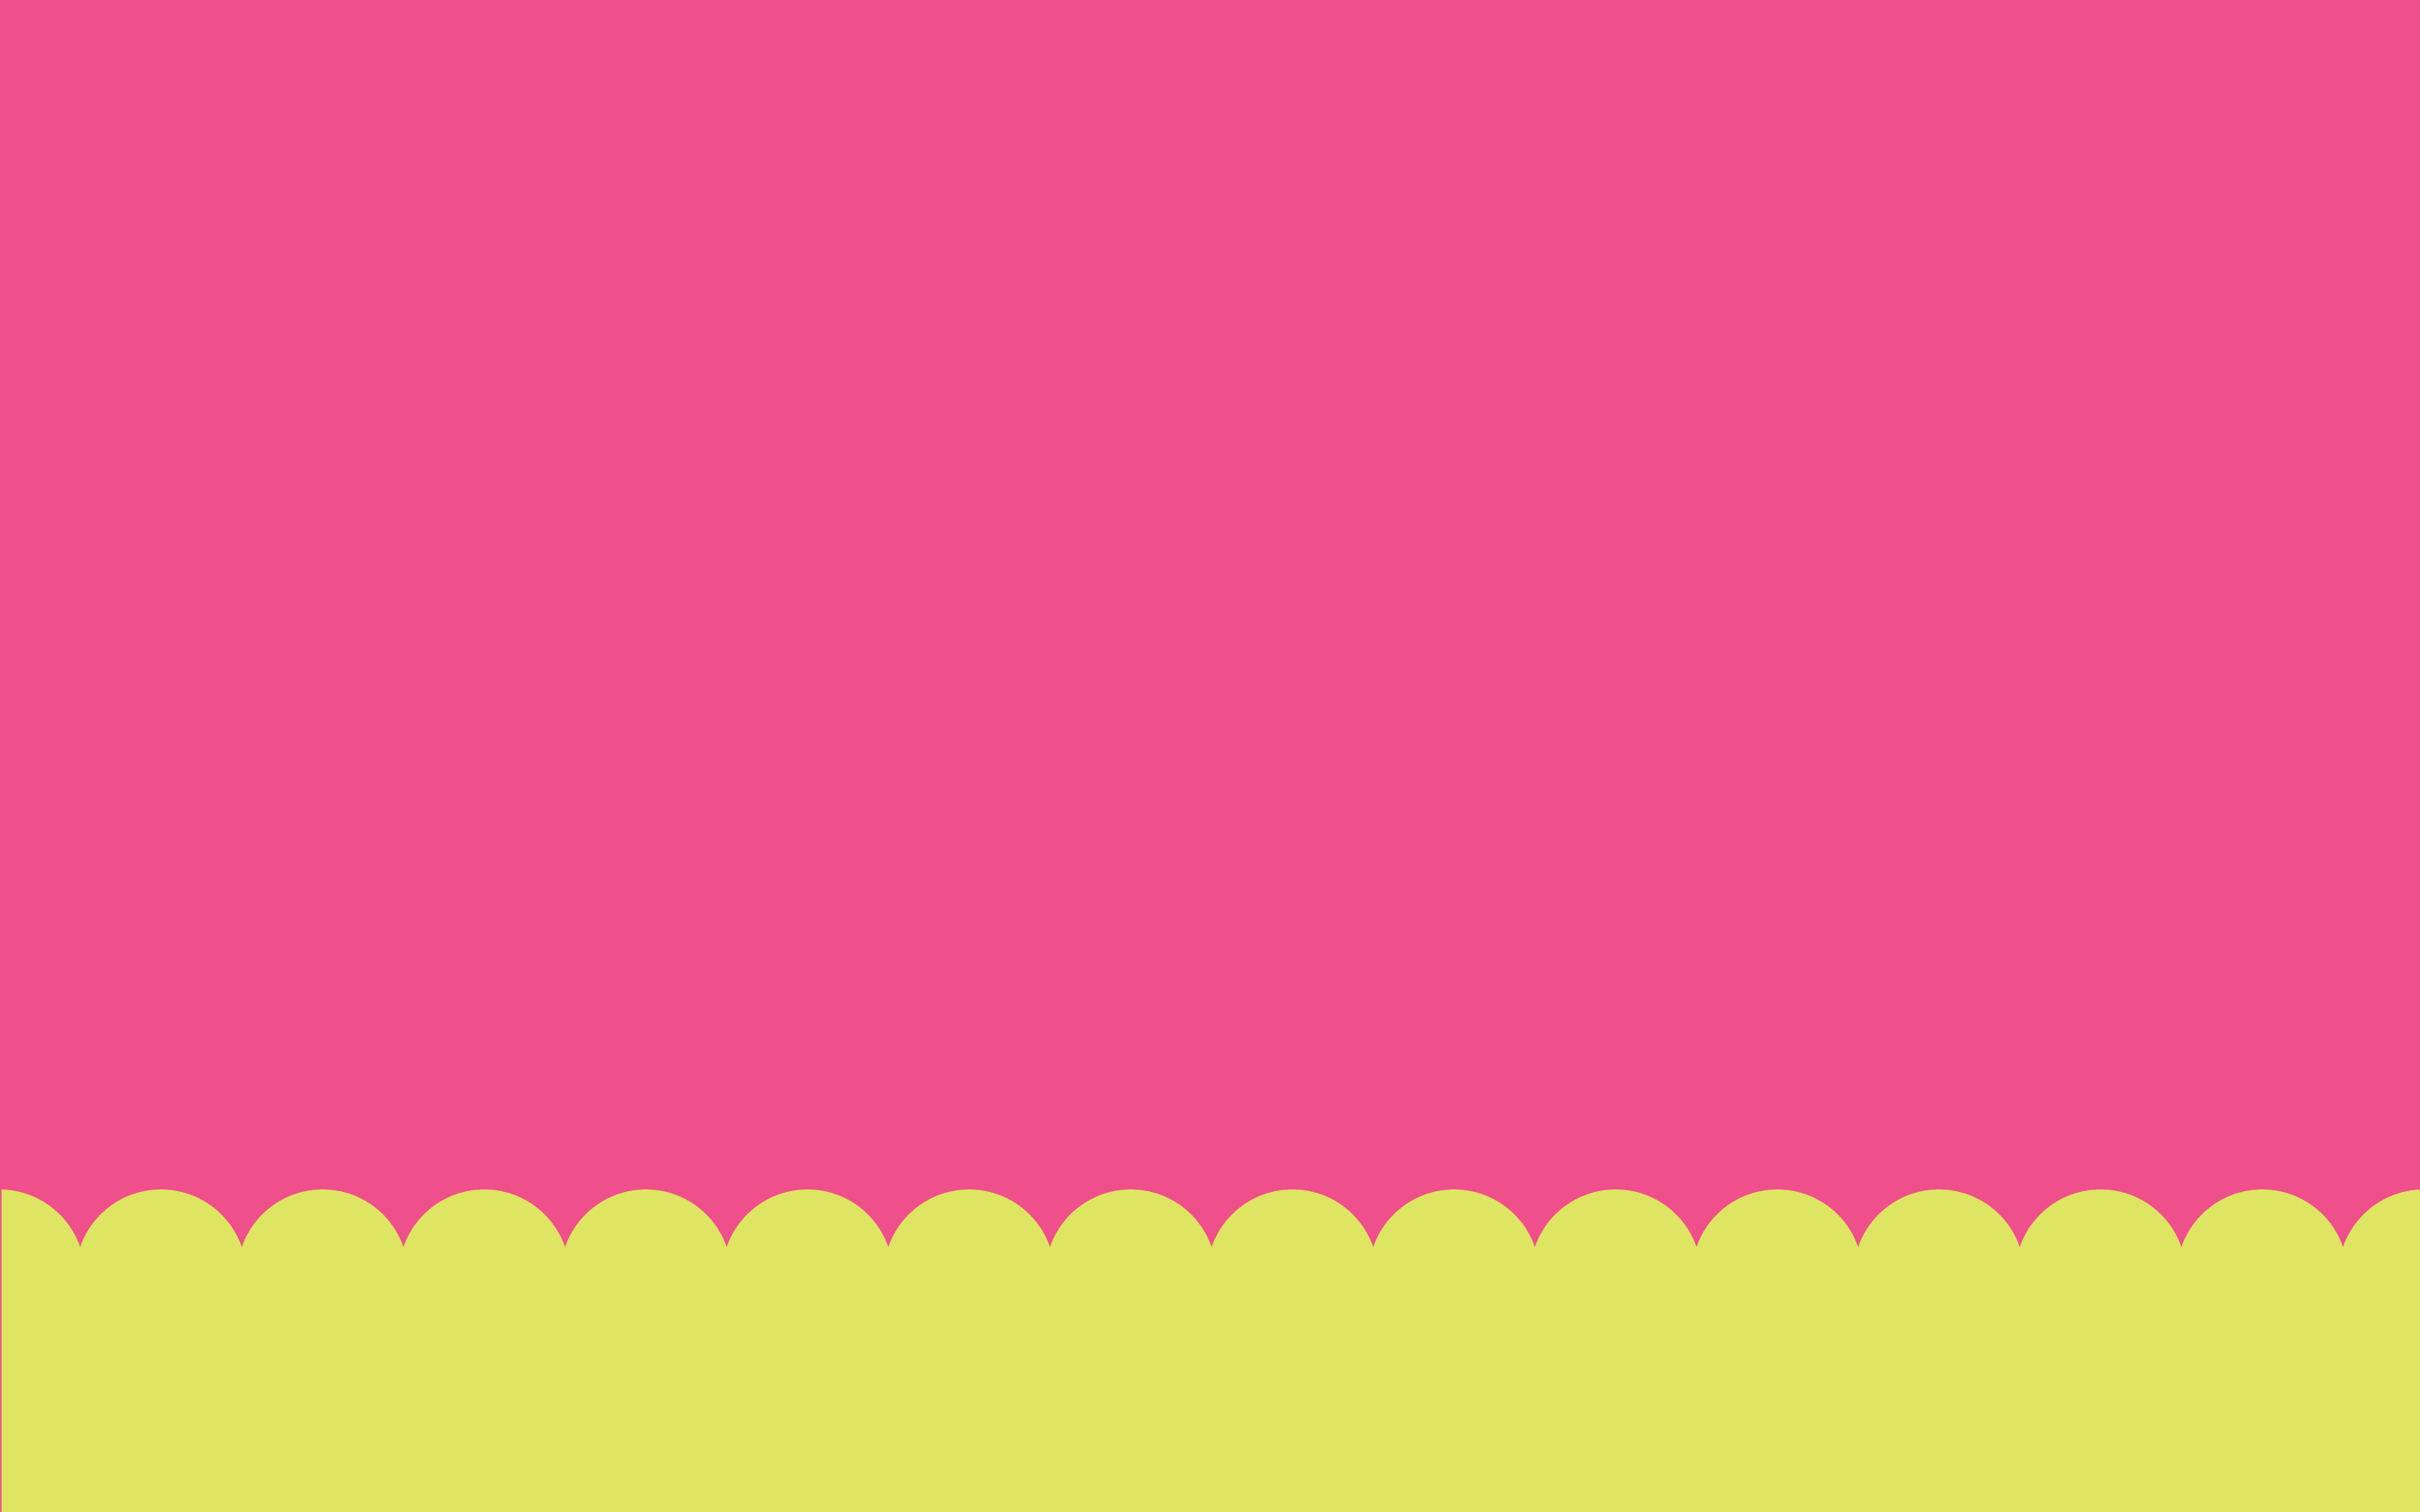 Pink Scallop Wallpaper.png 880×800 Pixels. Foods To Serve